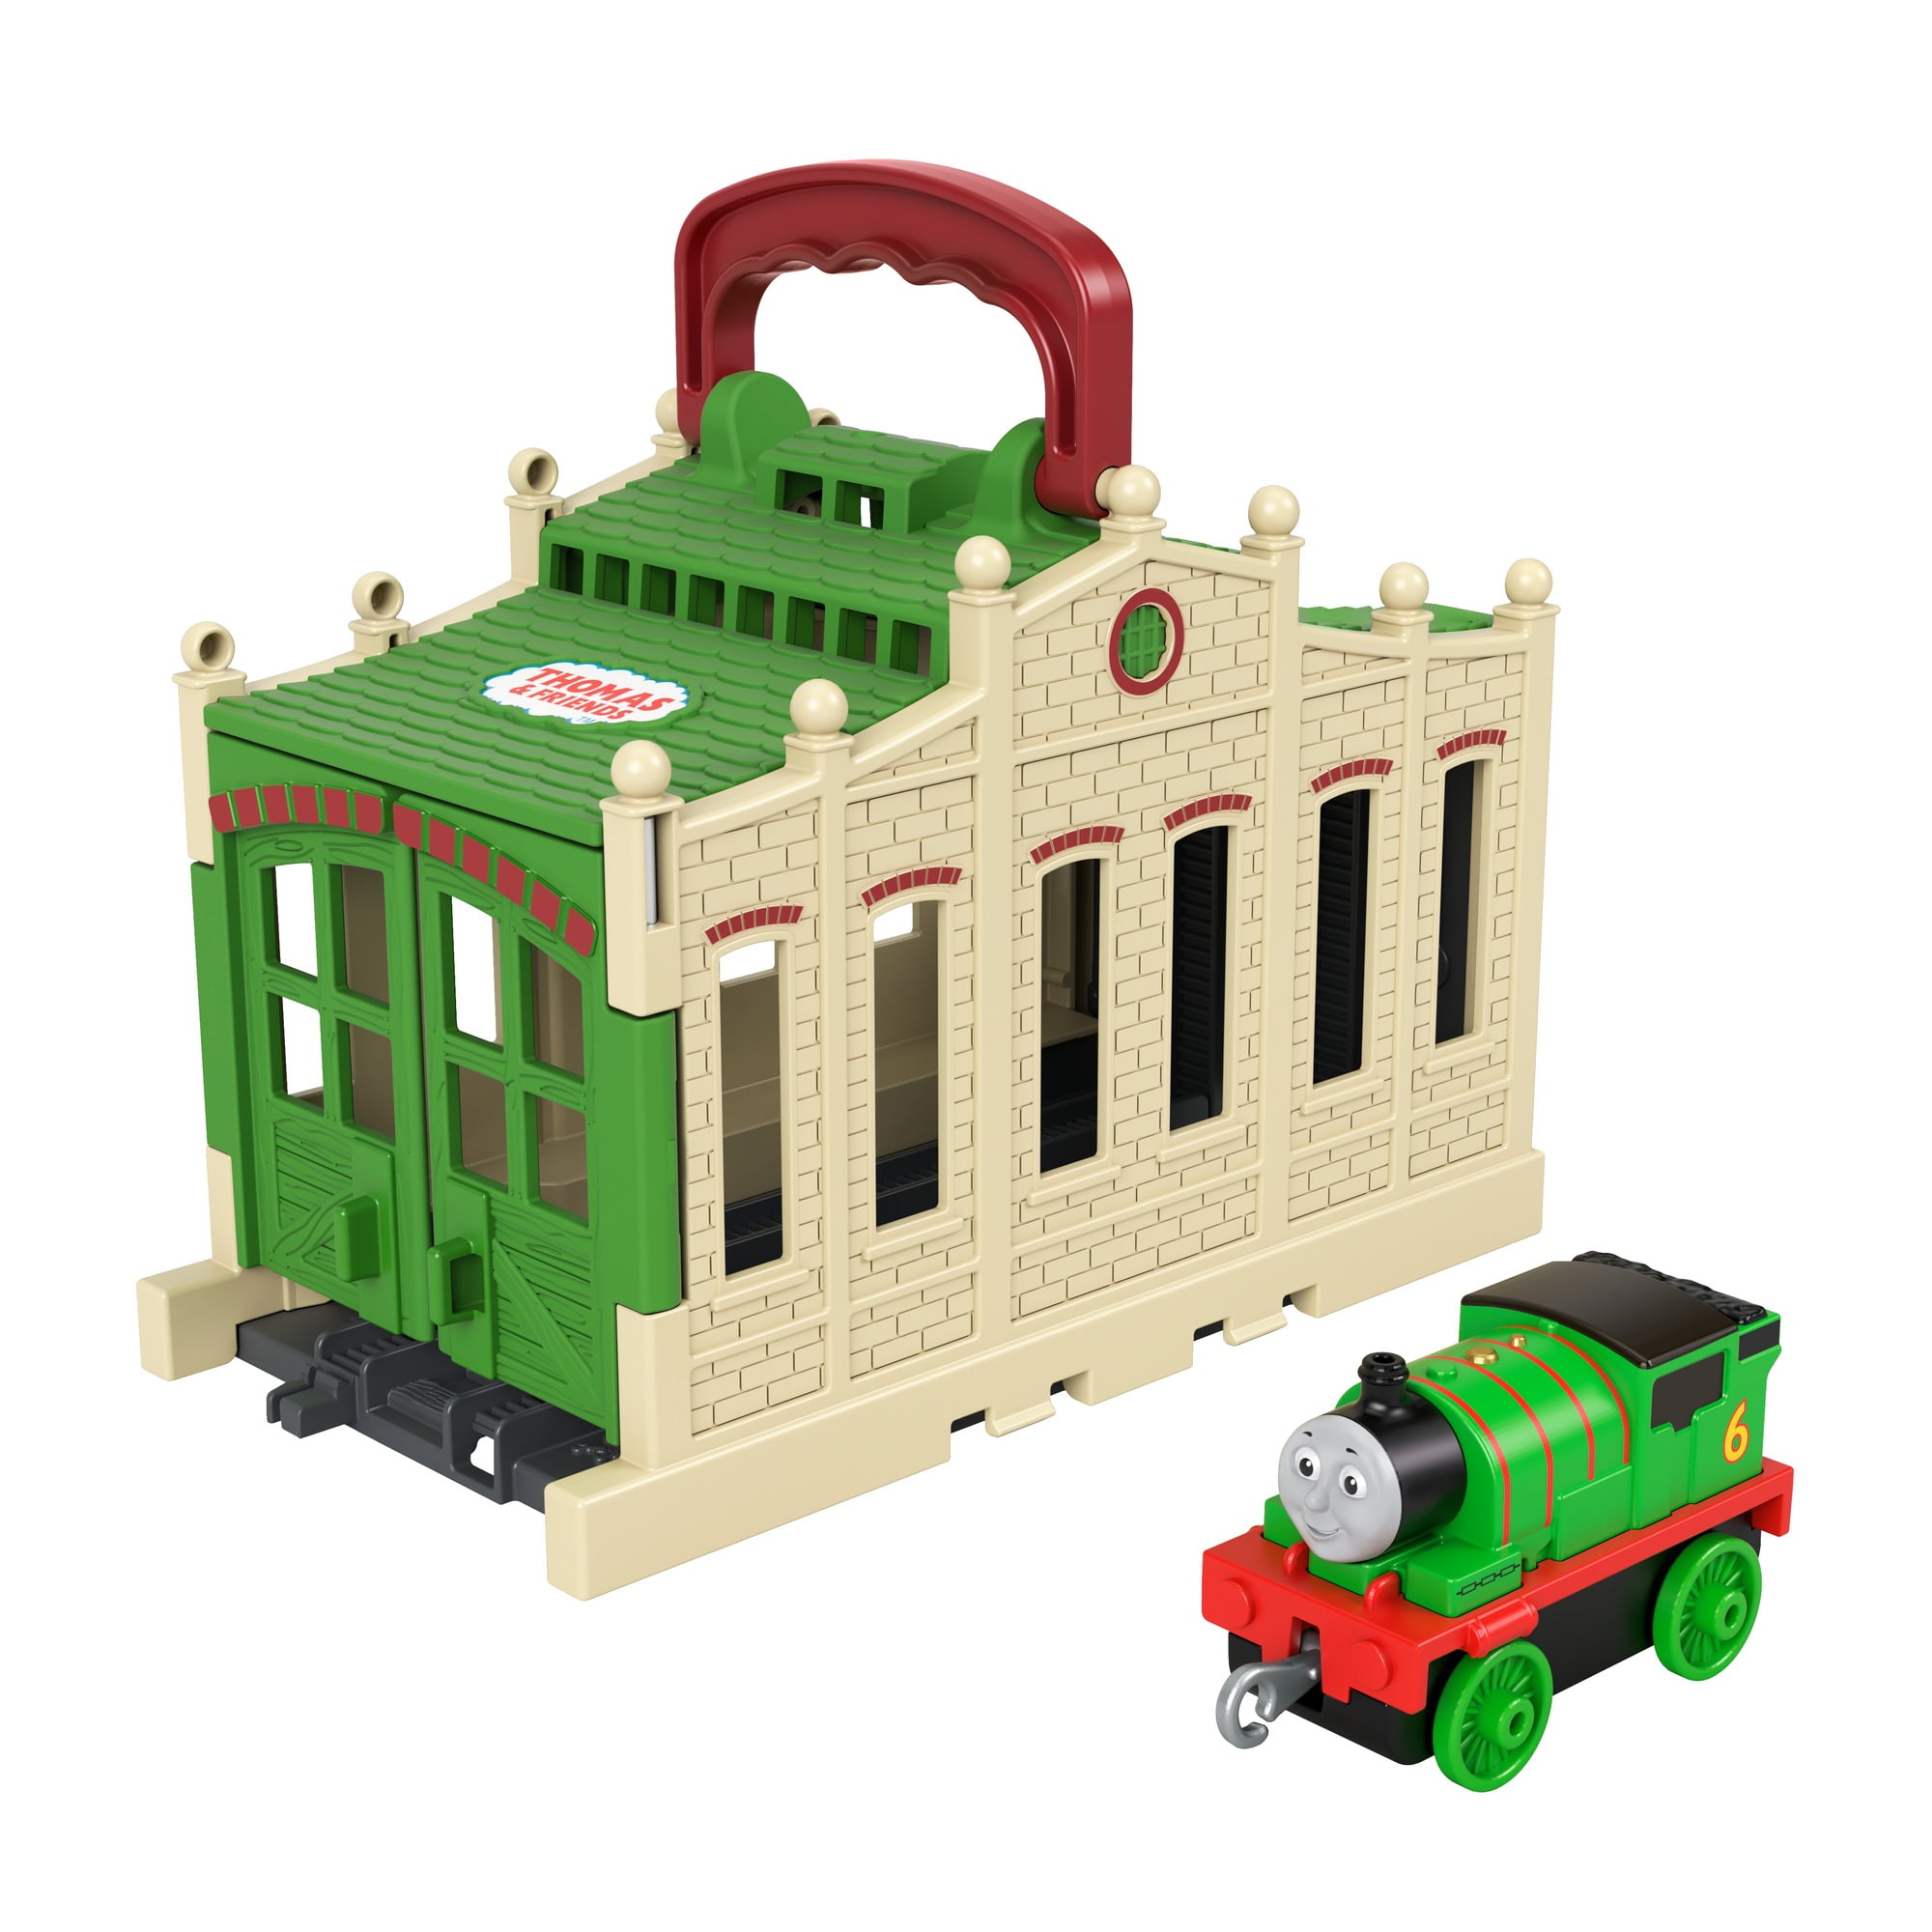 Go Thomas Train Engine, Thomas The Train Engine Loft Bed